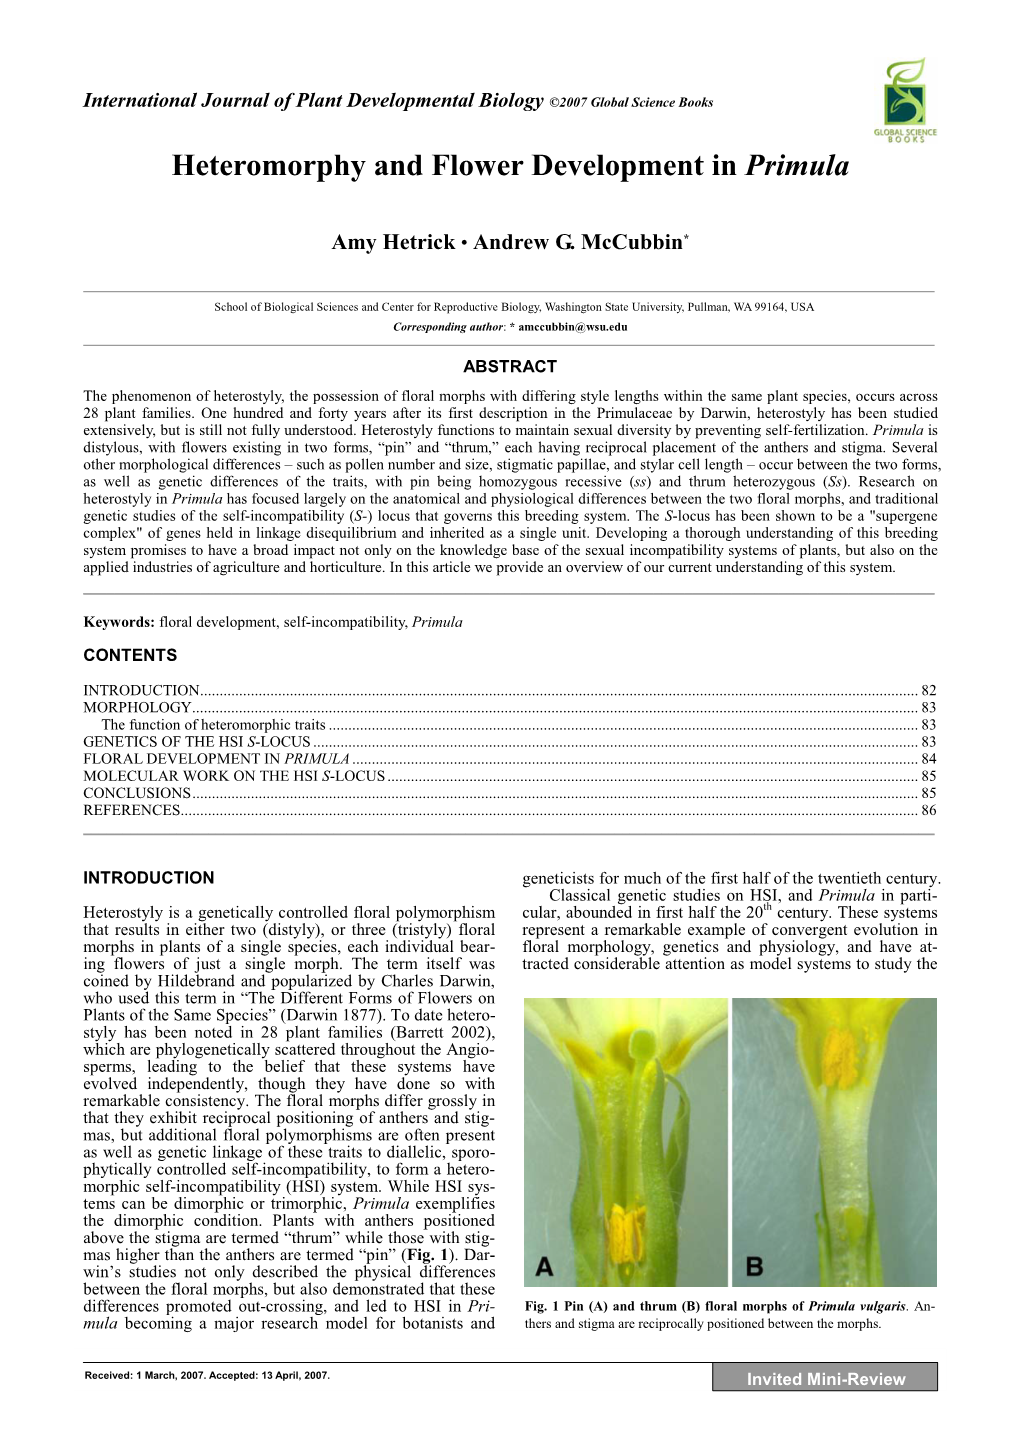 Heteromorphy and Flower Development in Primula